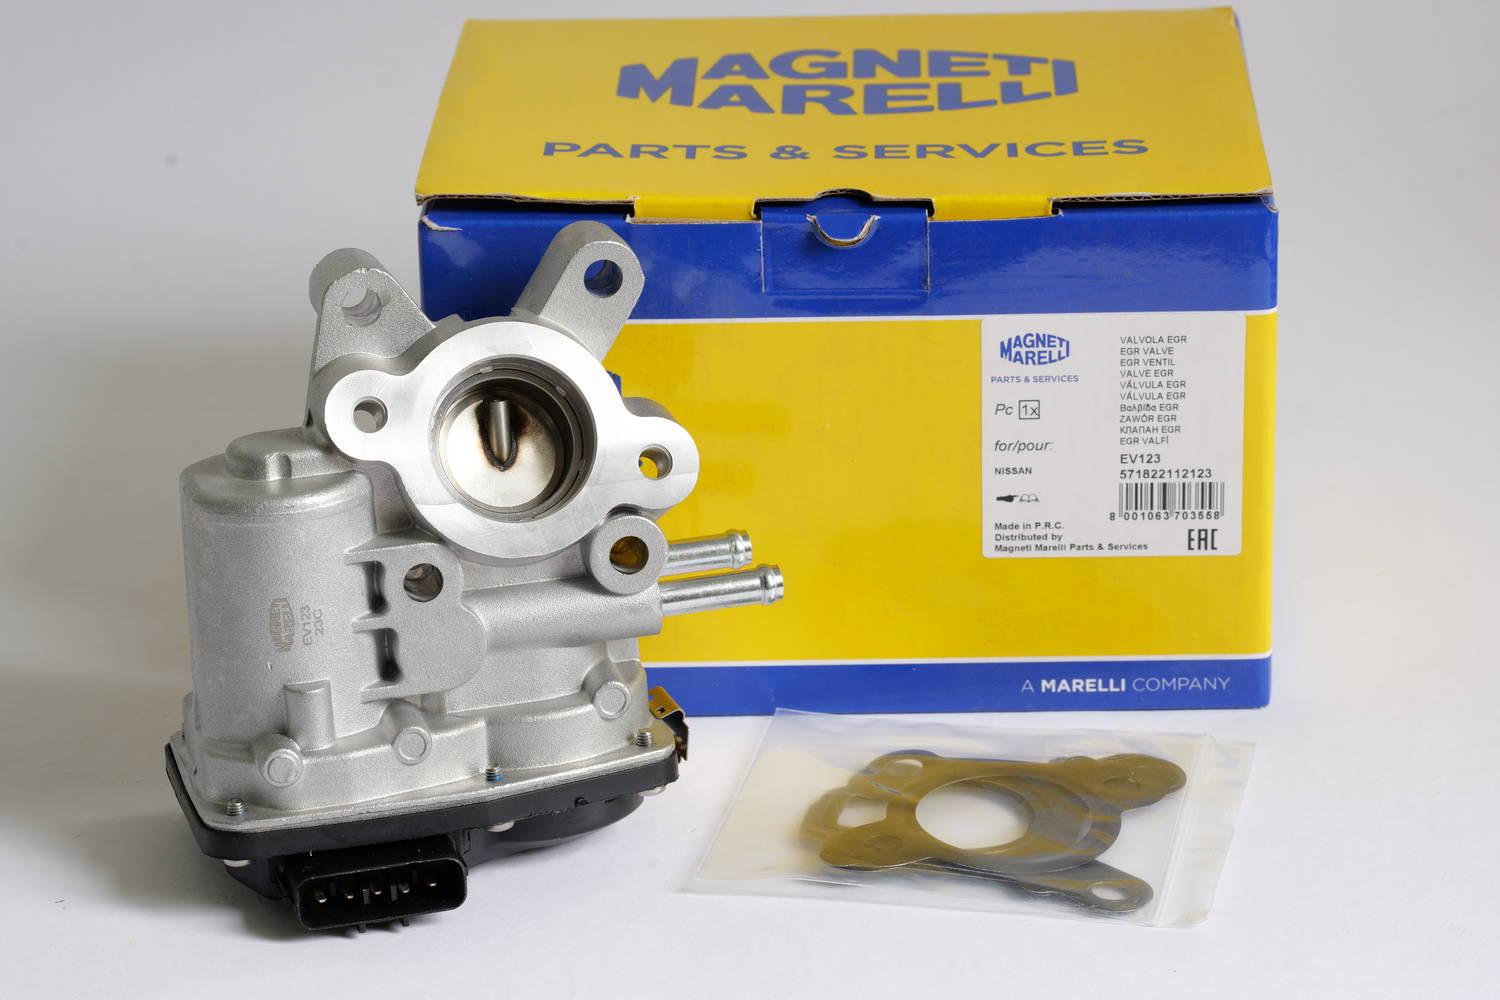 Magneti Marelli AGR Ventil für Nissan NP300 Navara Pickup Pathfinder III 571822112123